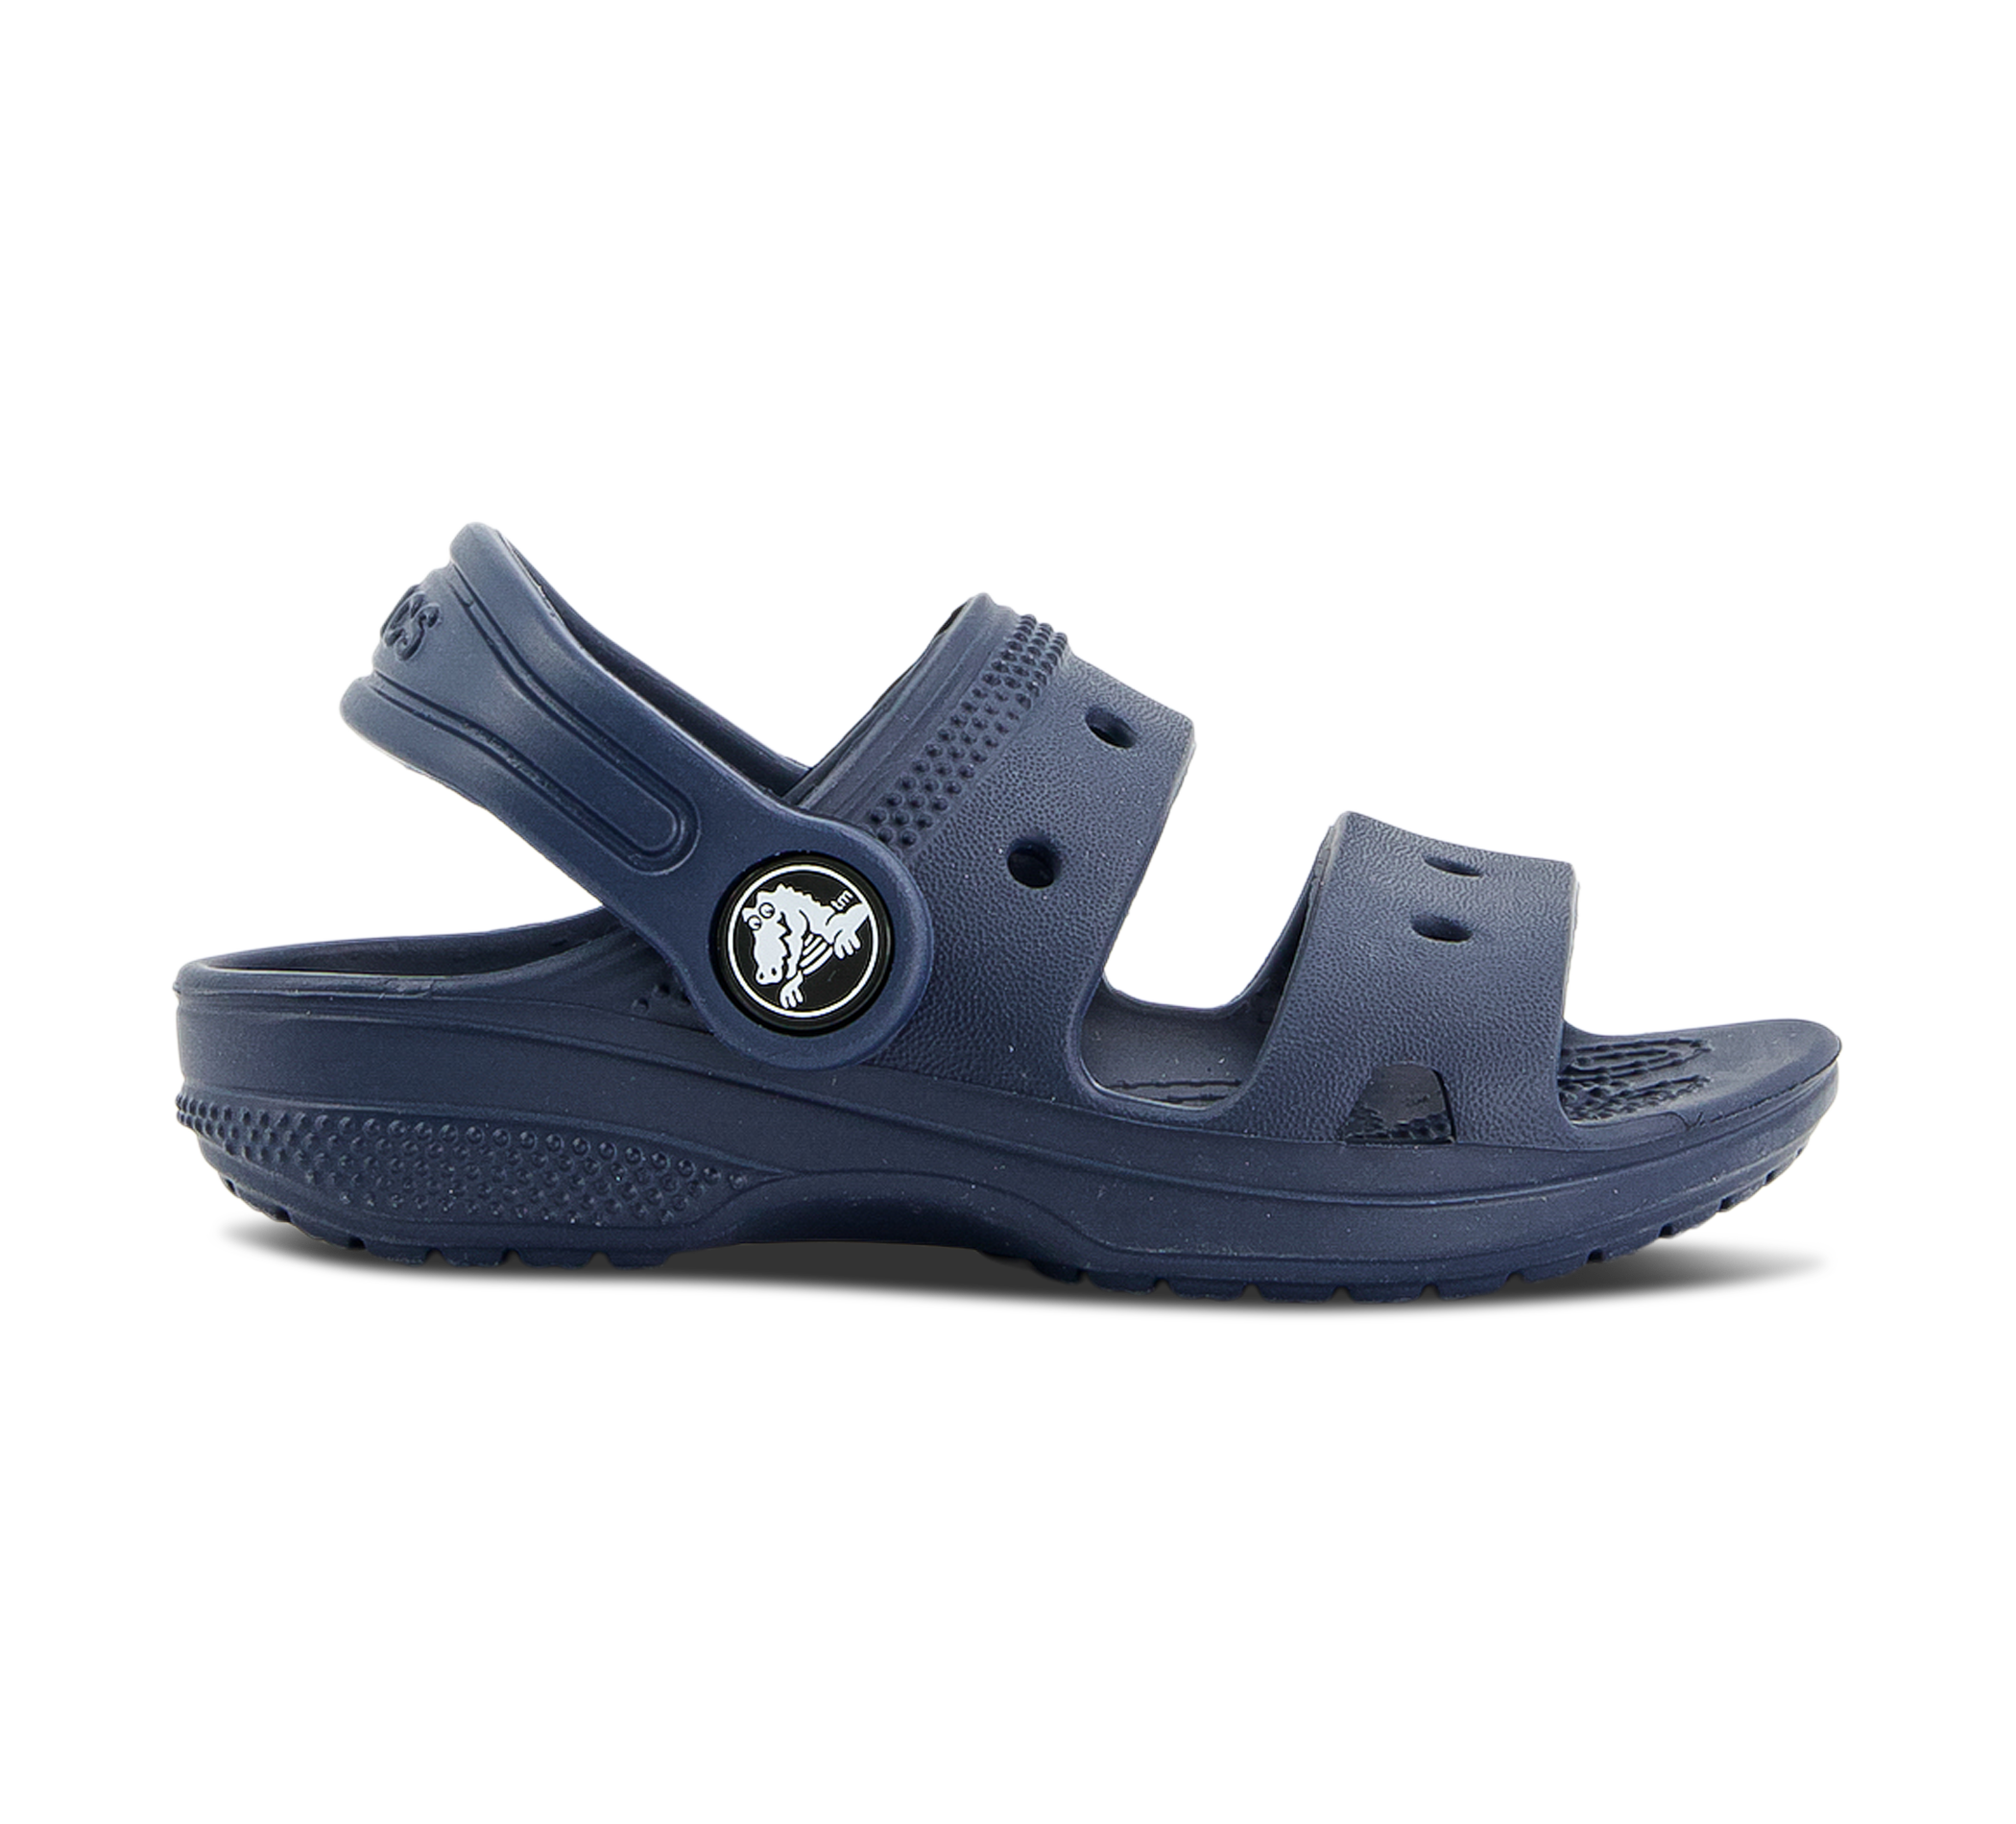 Classic Crocs Sandals - Wassersandalen